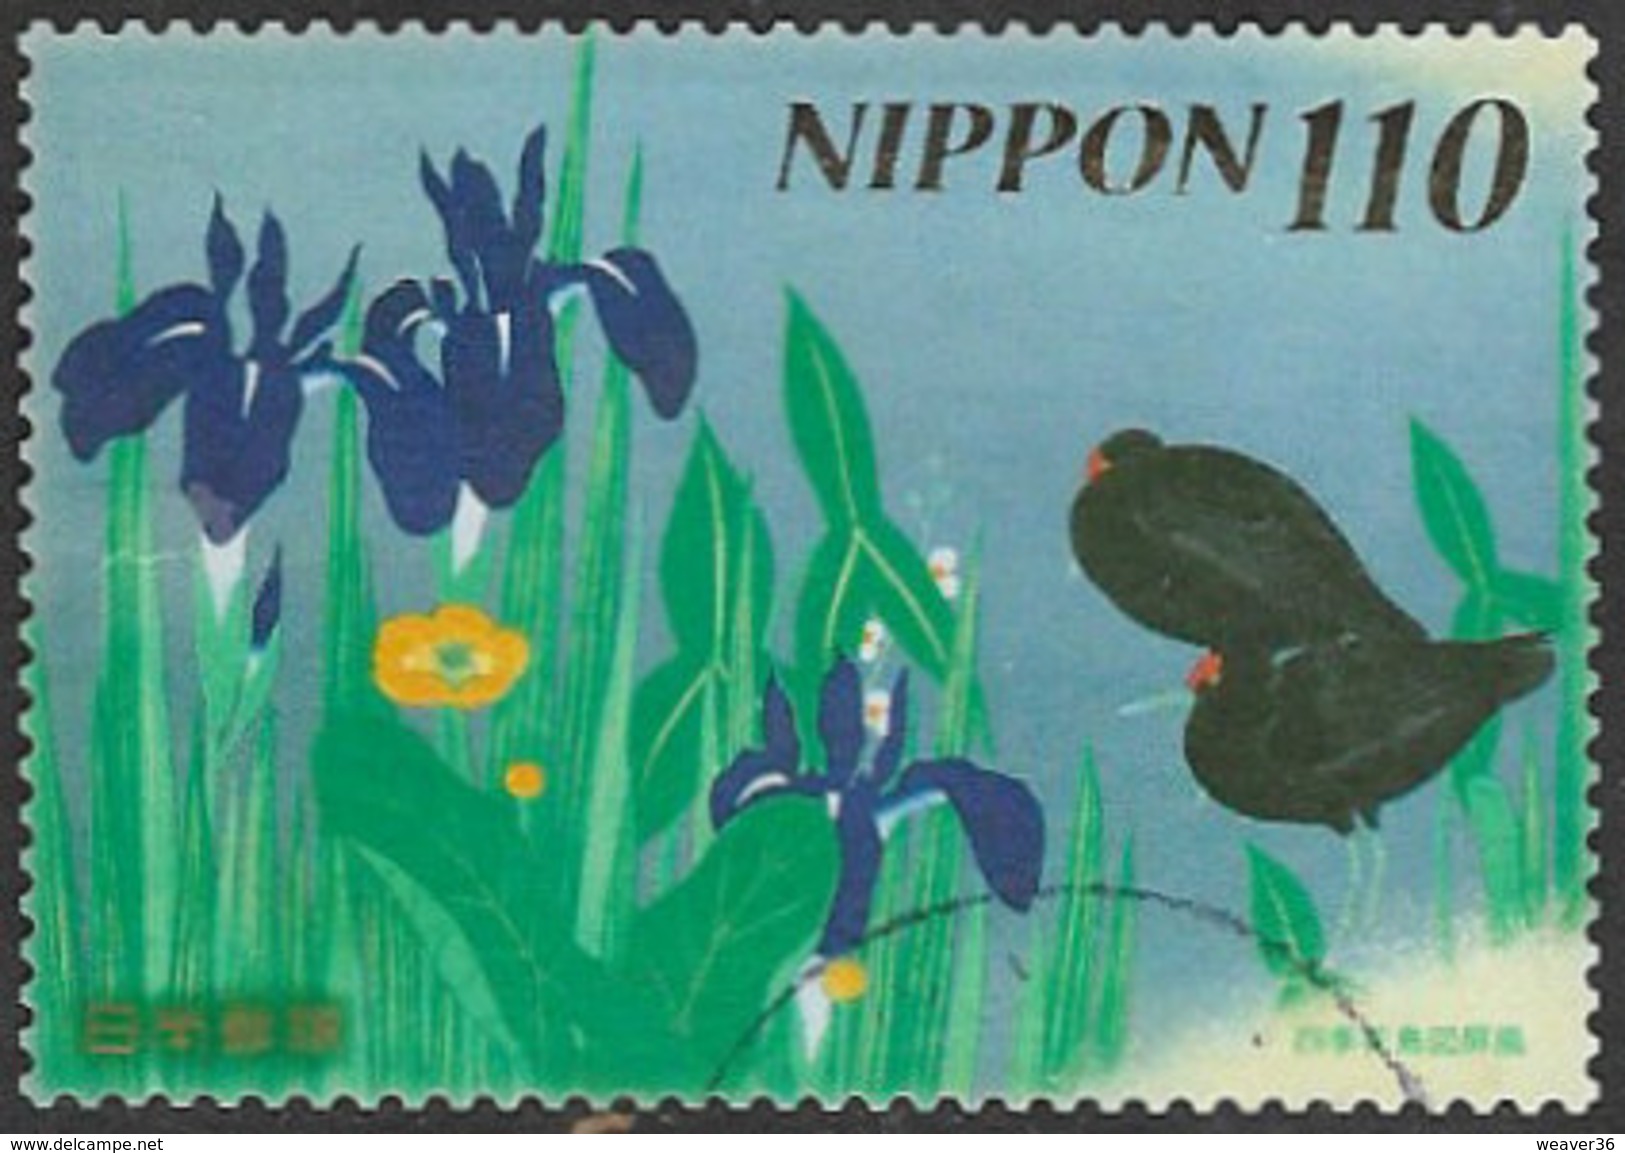 Japan SG3468 2006 Greetings 110y Good/fine Used [33/28475/5D] - Used Stamps